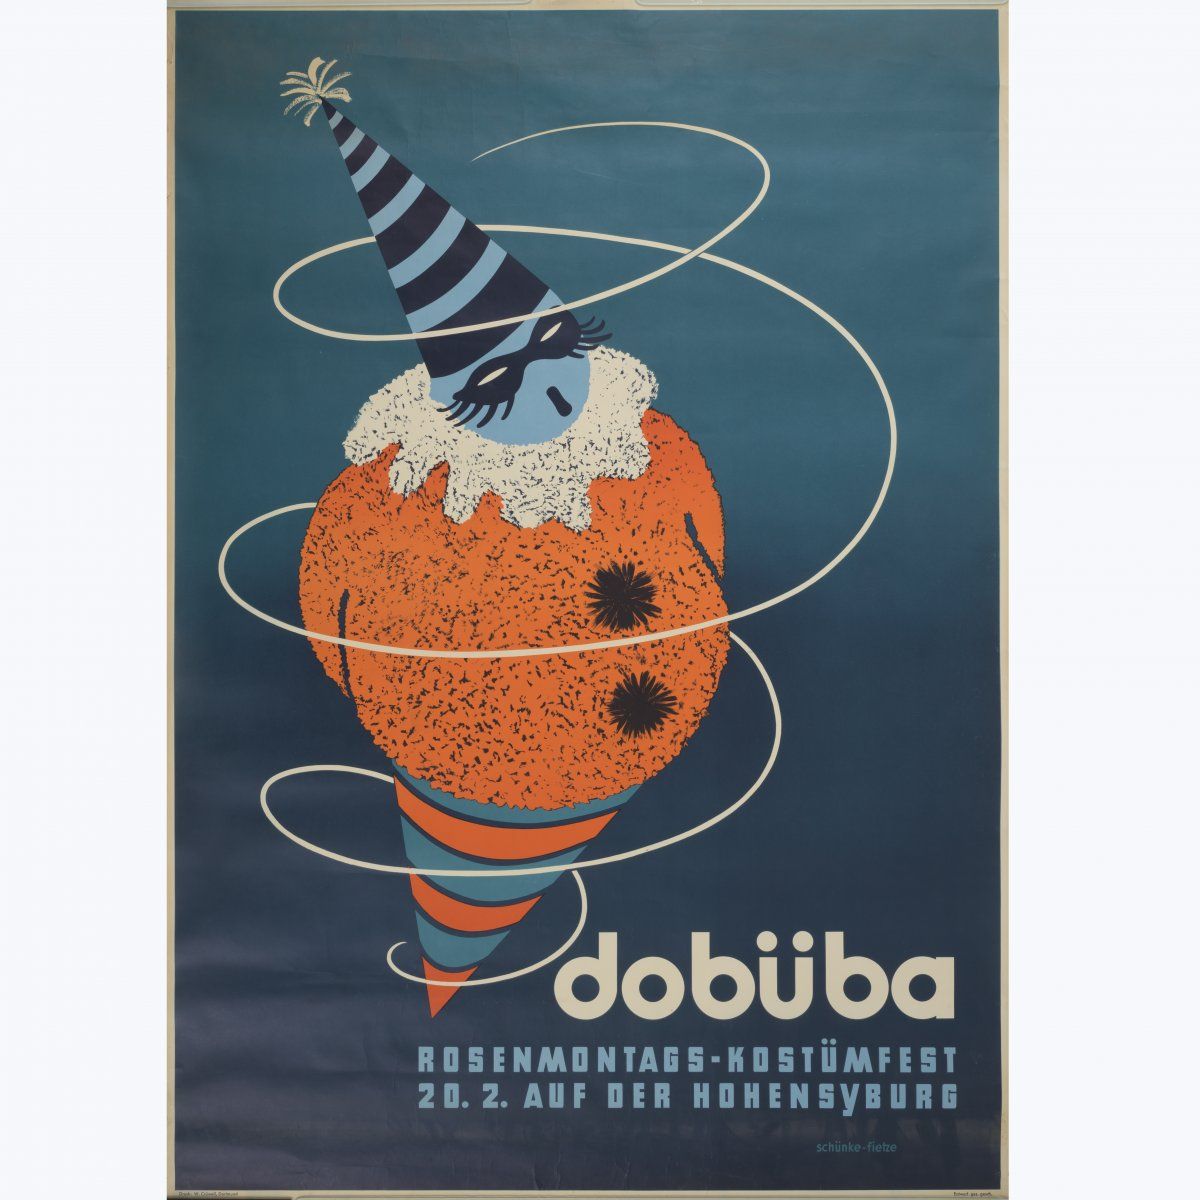 Null Schünke-Fietze, 'Dobüba' poster, 1938, 119.7 x 84 cm. Colour lithograph on &hellip;